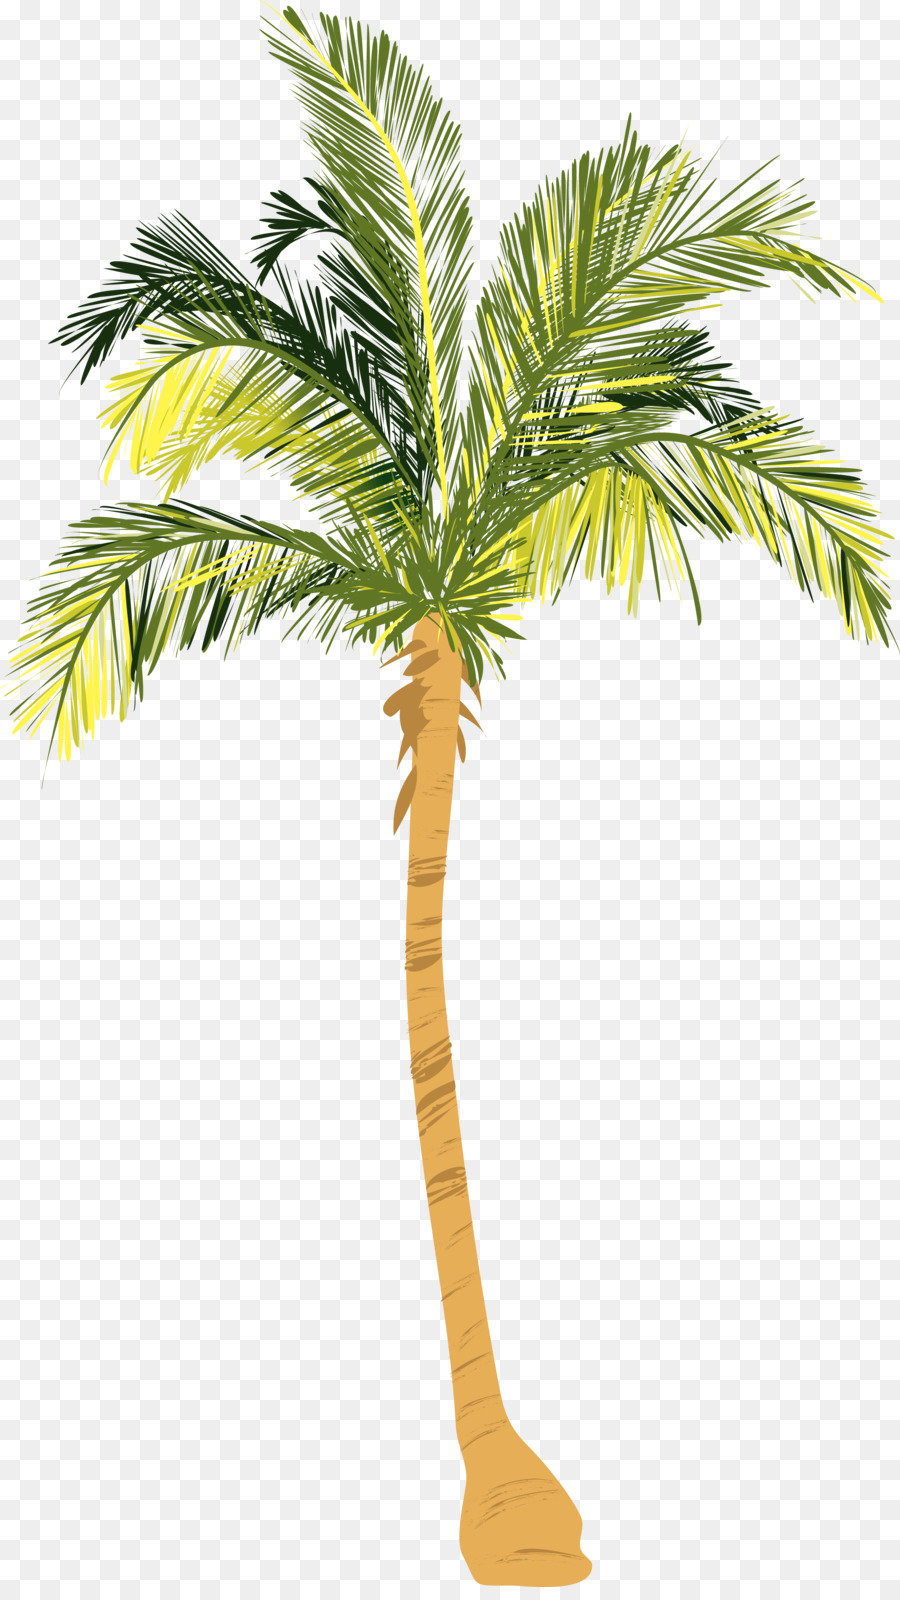 Baum-Nuss-Allergie Arecaceae Kokosnuss, Holzige pflanze - Palme